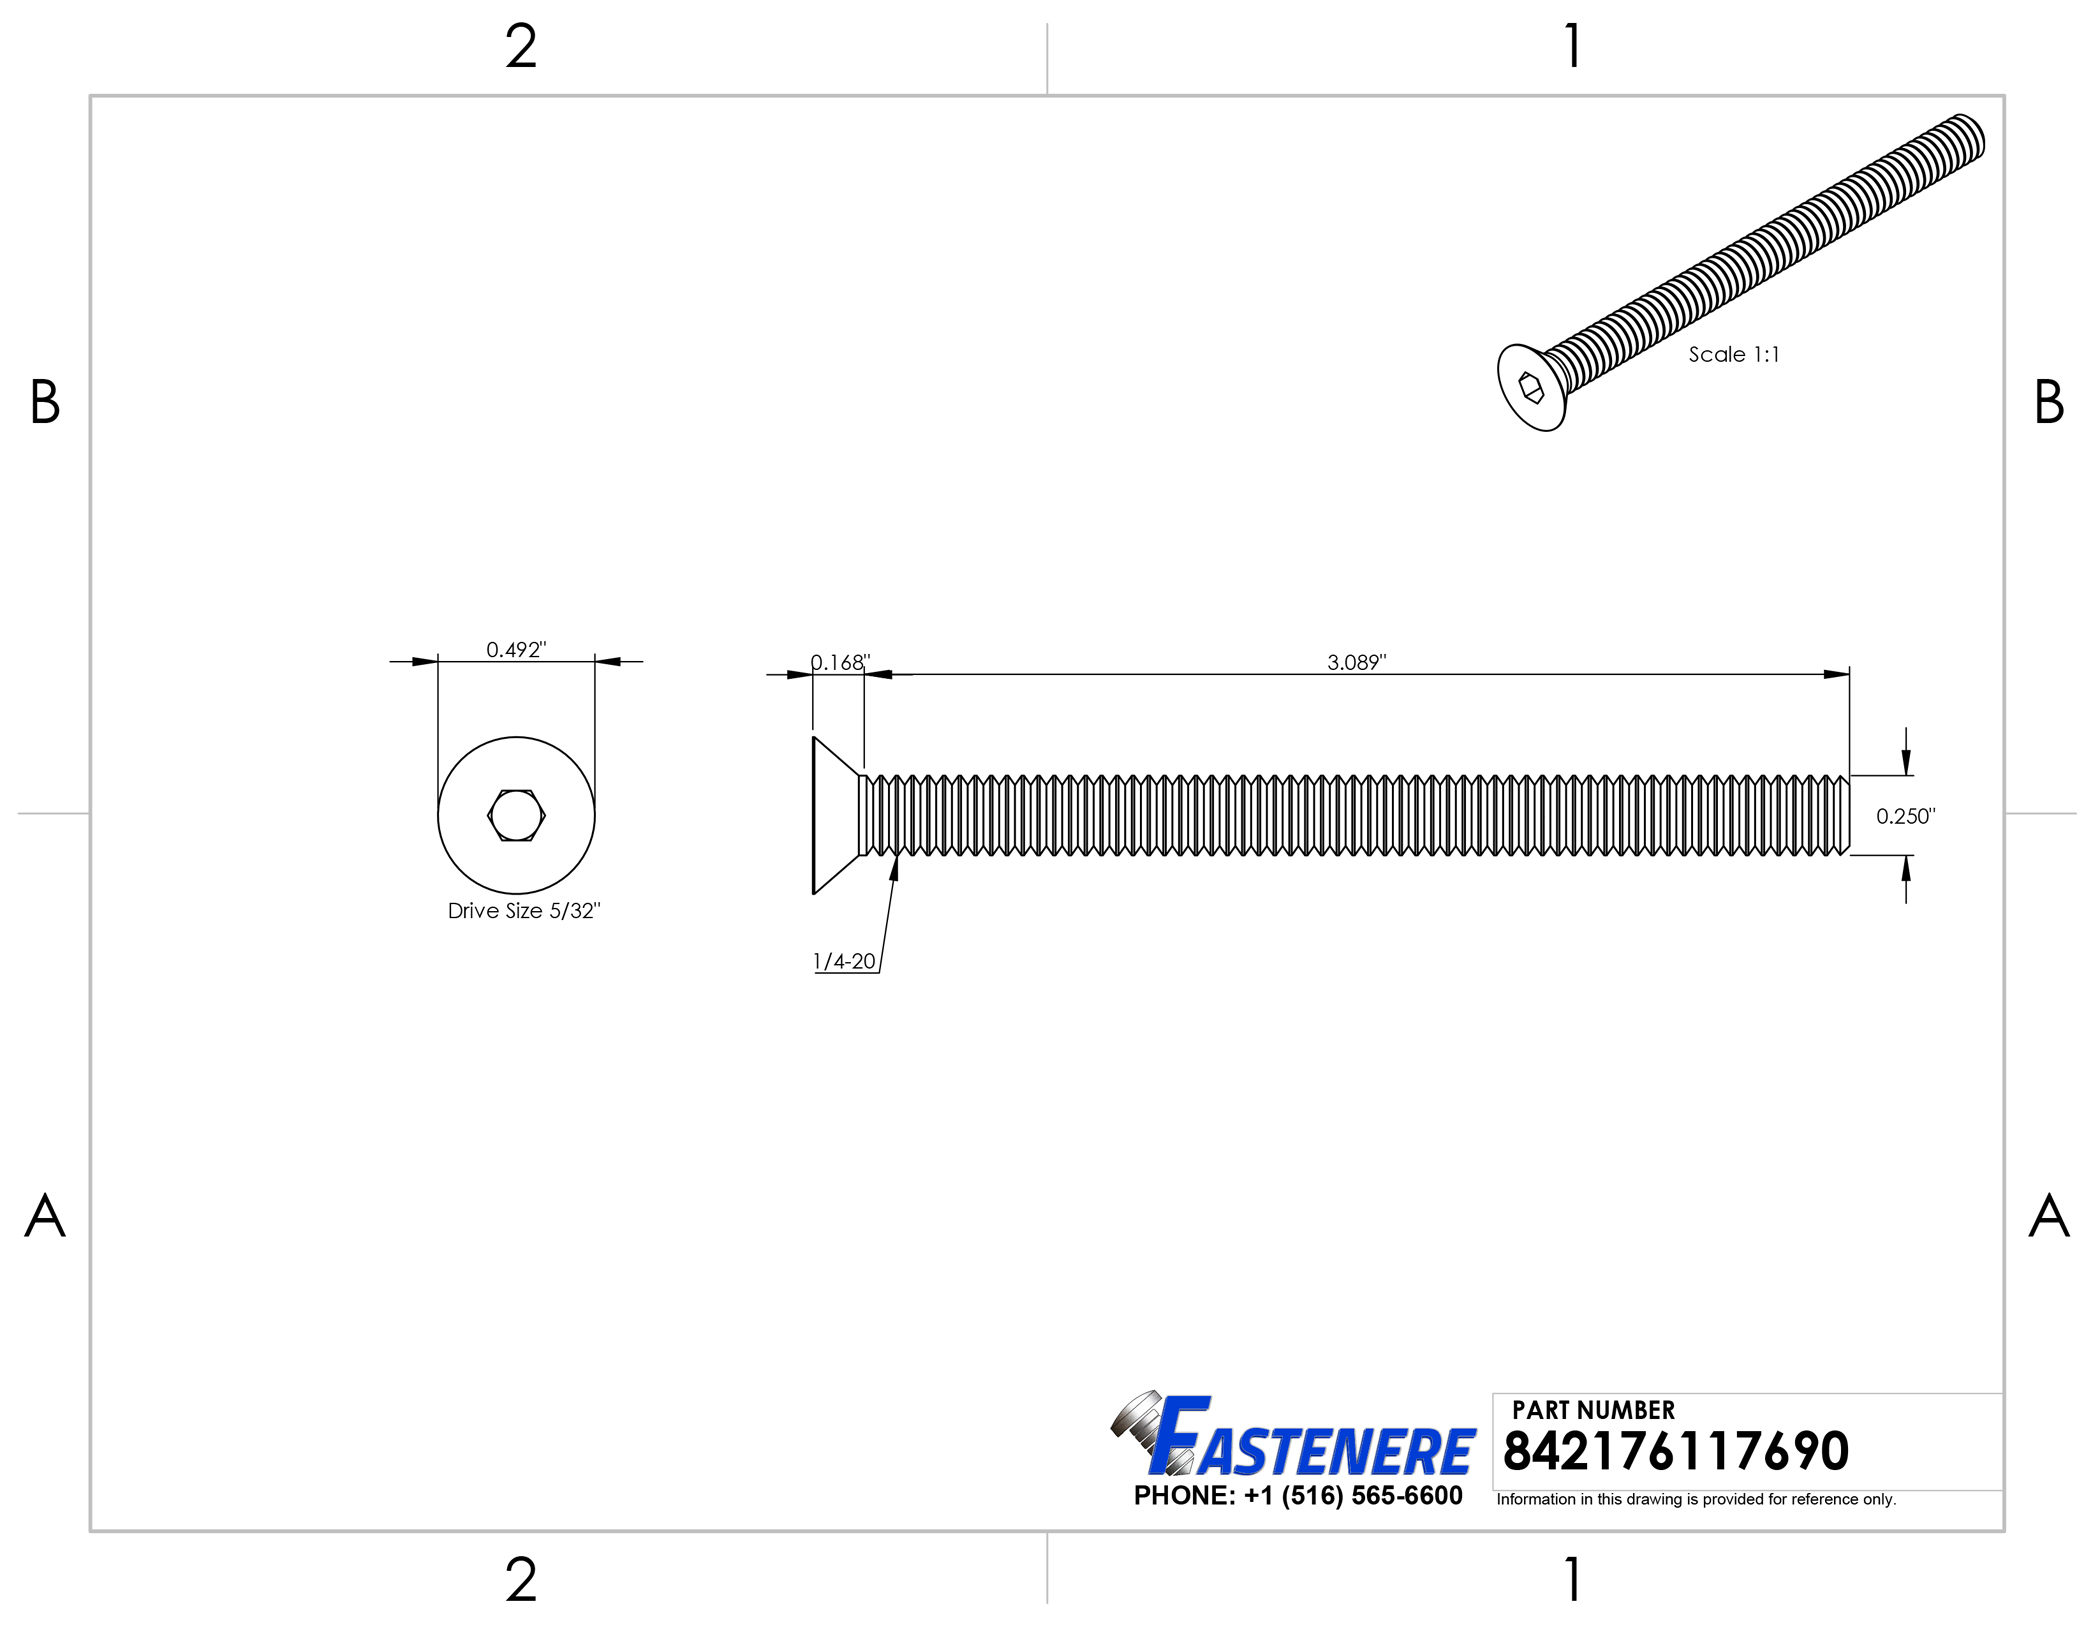 1/4"-20316 Stainless Steel Flat Head Socket Cap Screws Select Length & Qty 